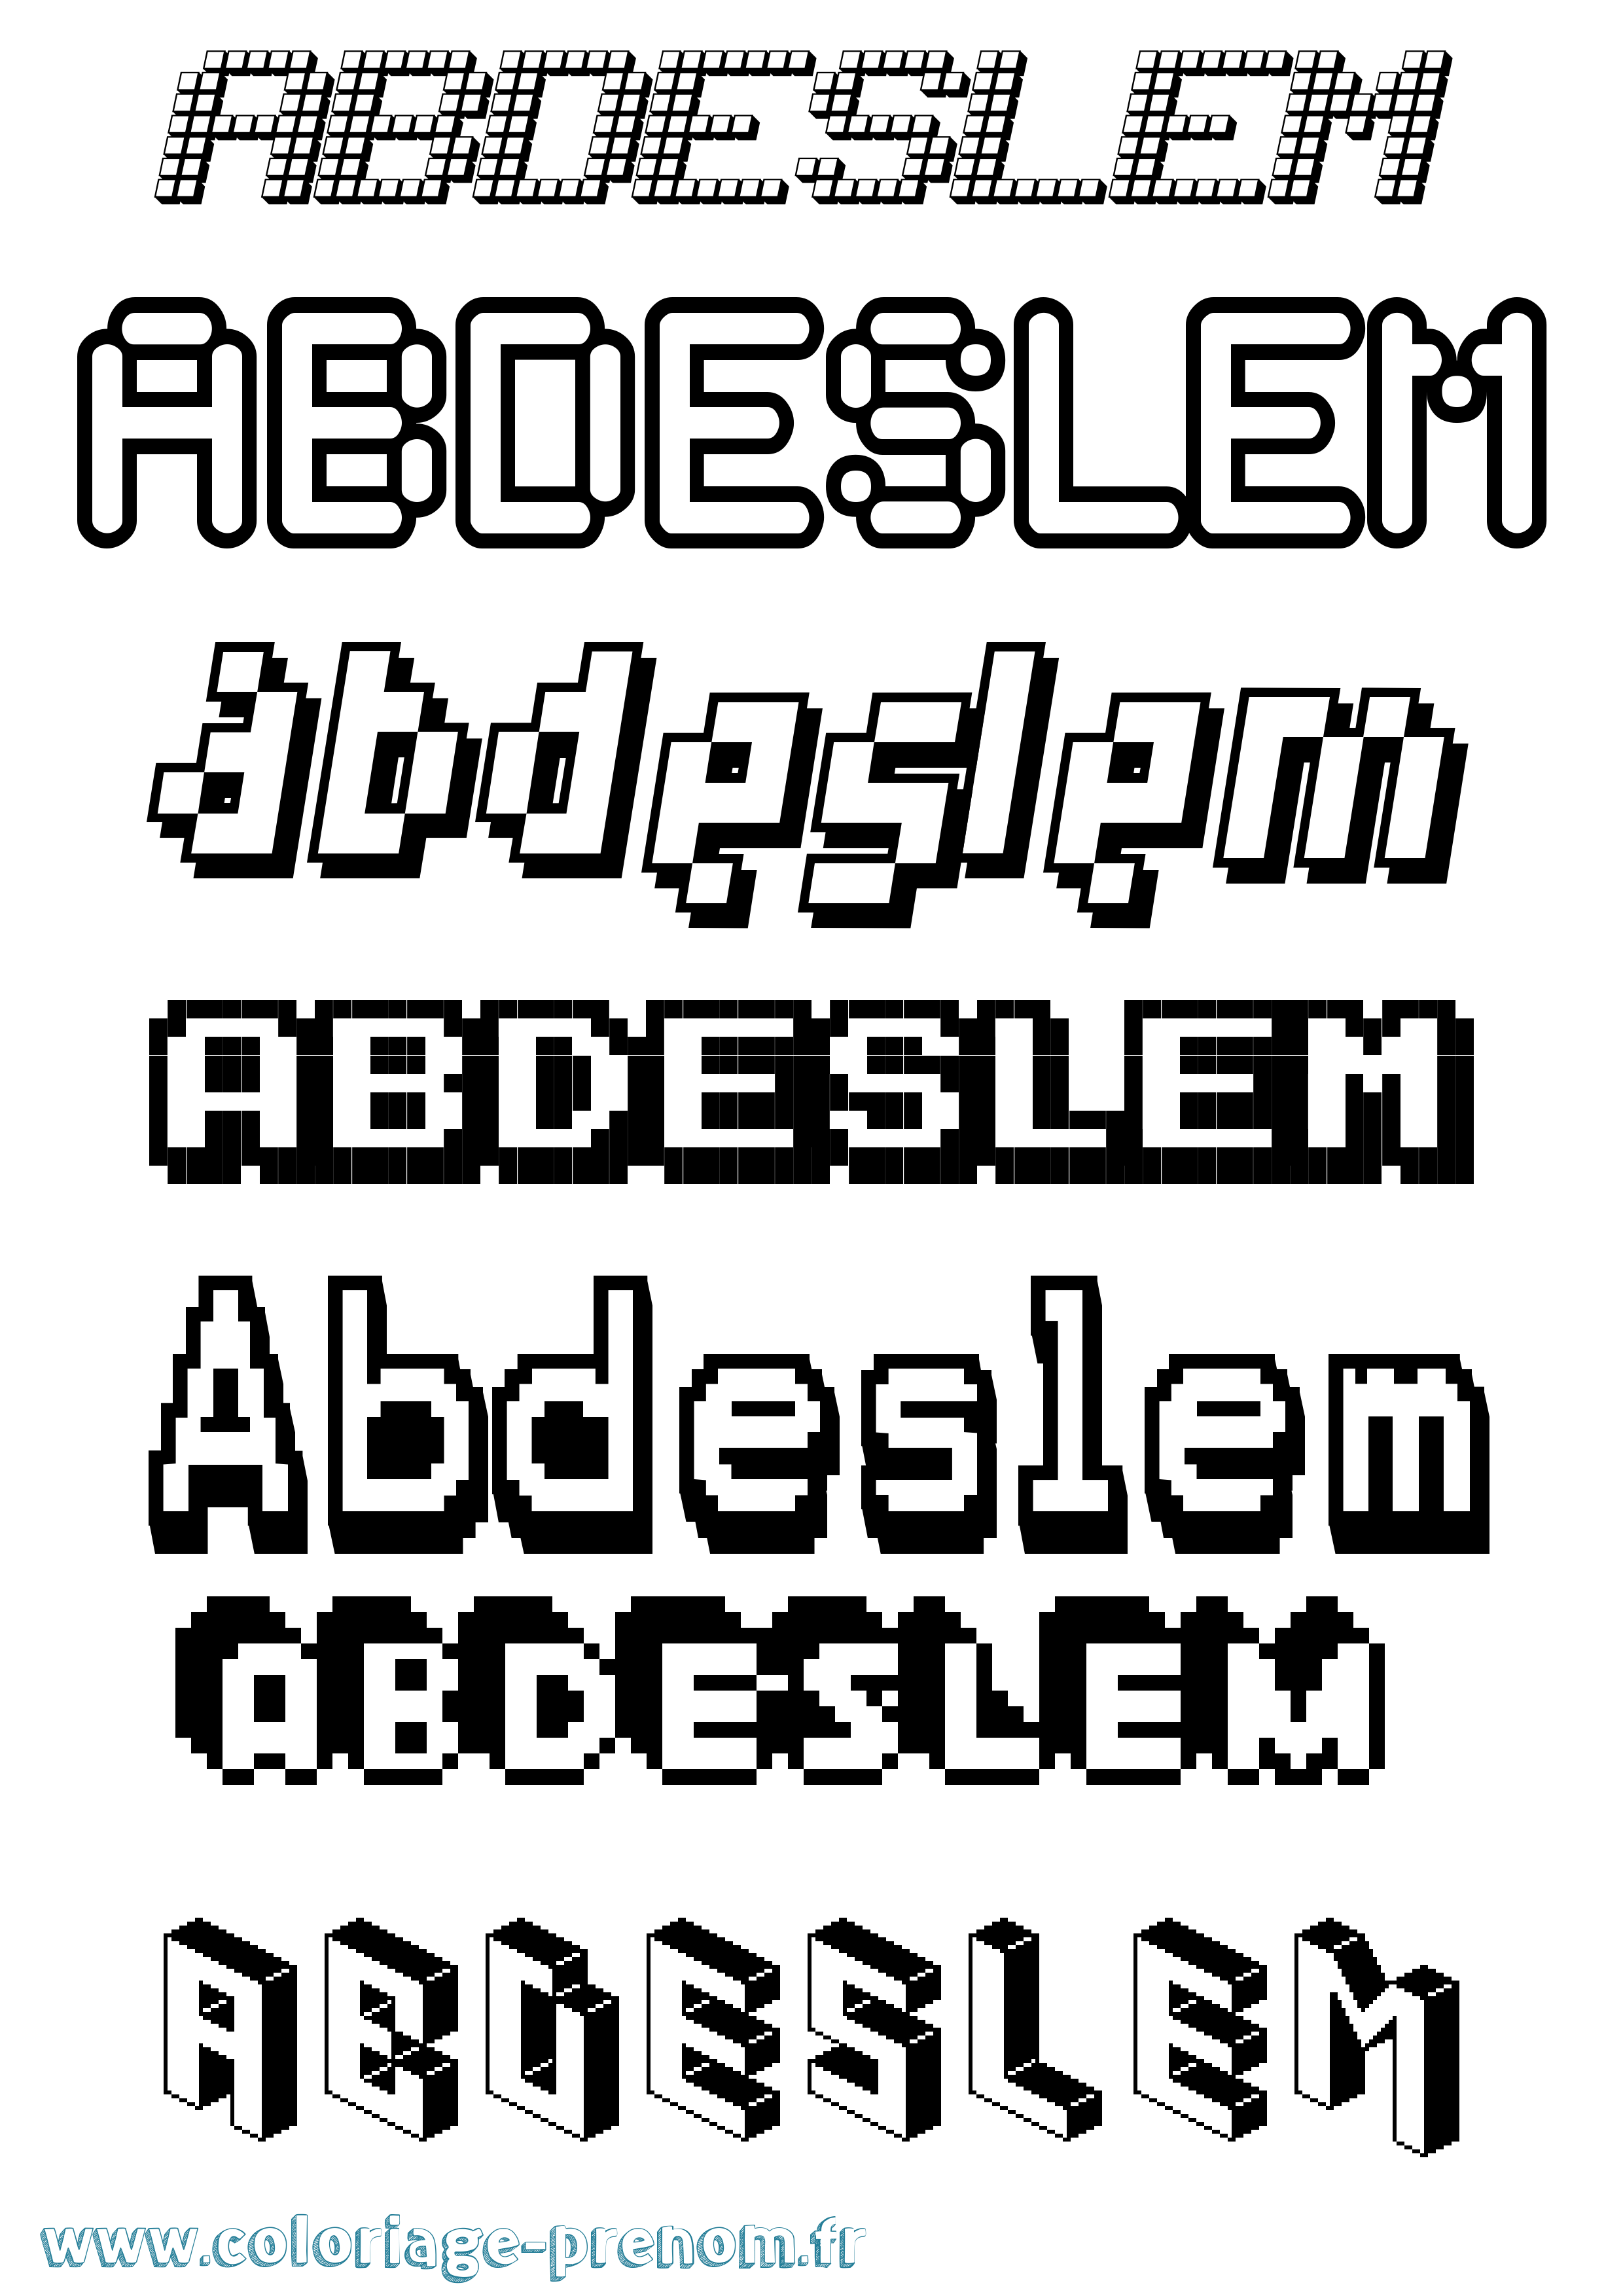 Coloriage prénom Abdeslem Pixel